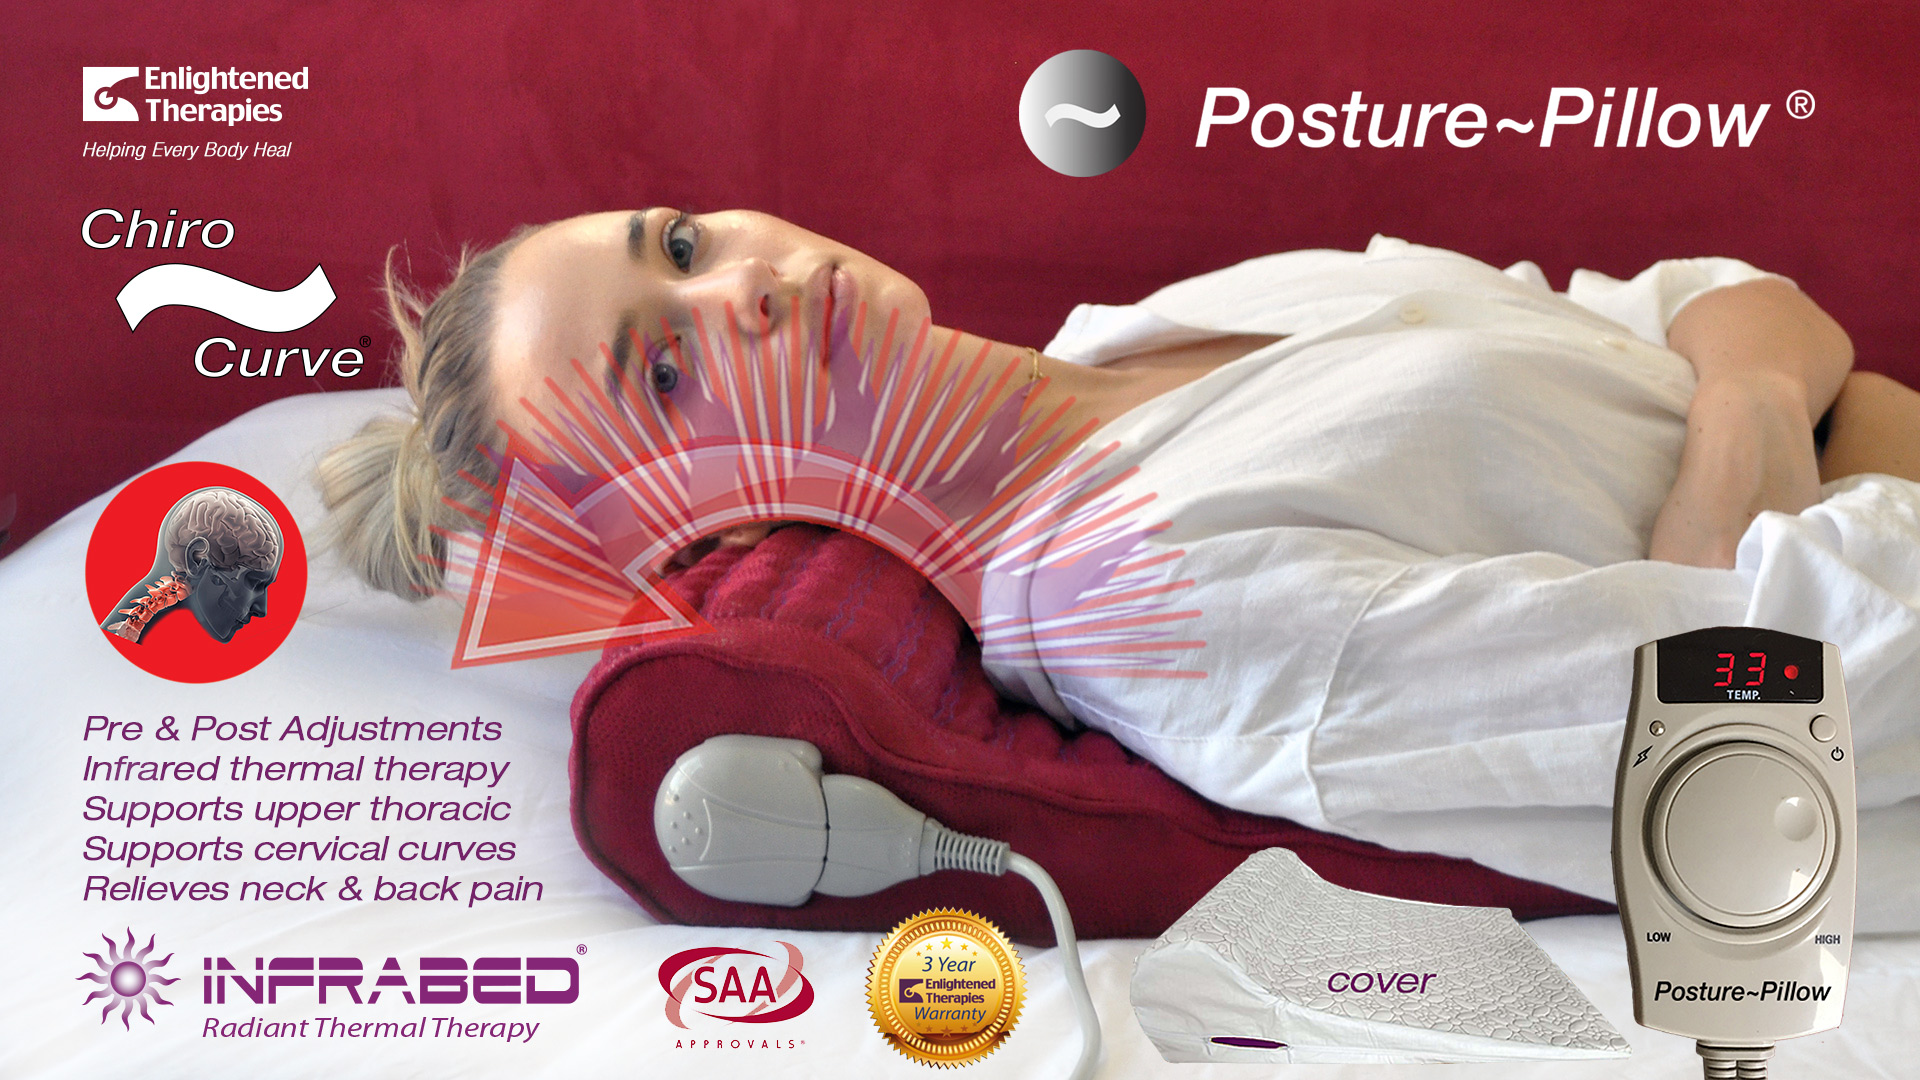 https://www.enlightenedtherapies.com/wp-content/uploads/2019/09/Chiro-Posture-Pillow-Ad-2019-Aug.jpg